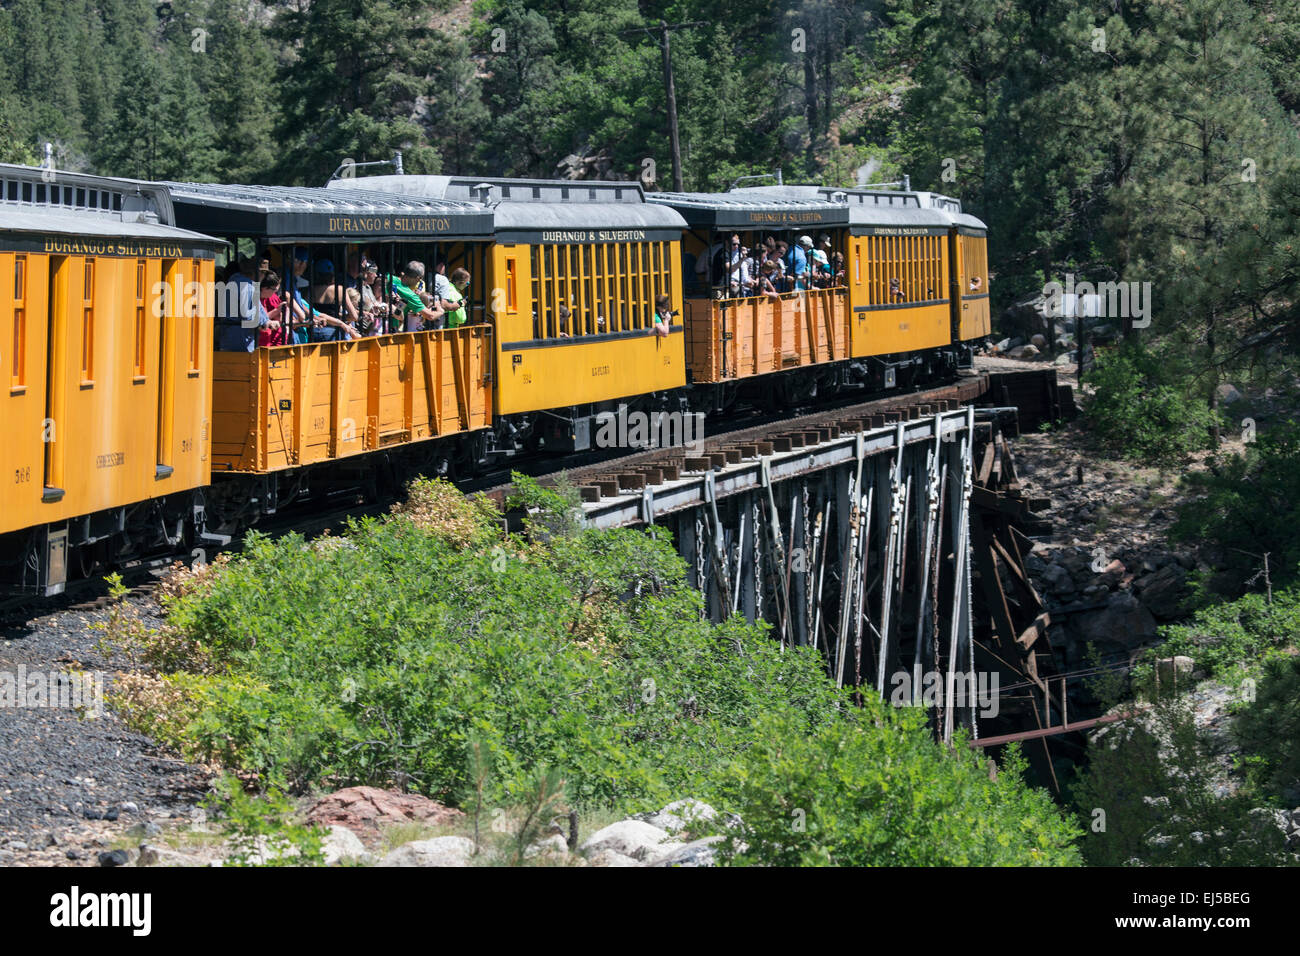 Durango and Silverton Narrow Gauge Railroad mit Dampfmaschine Zug Fahrt, Colorado, USA Stockfoto